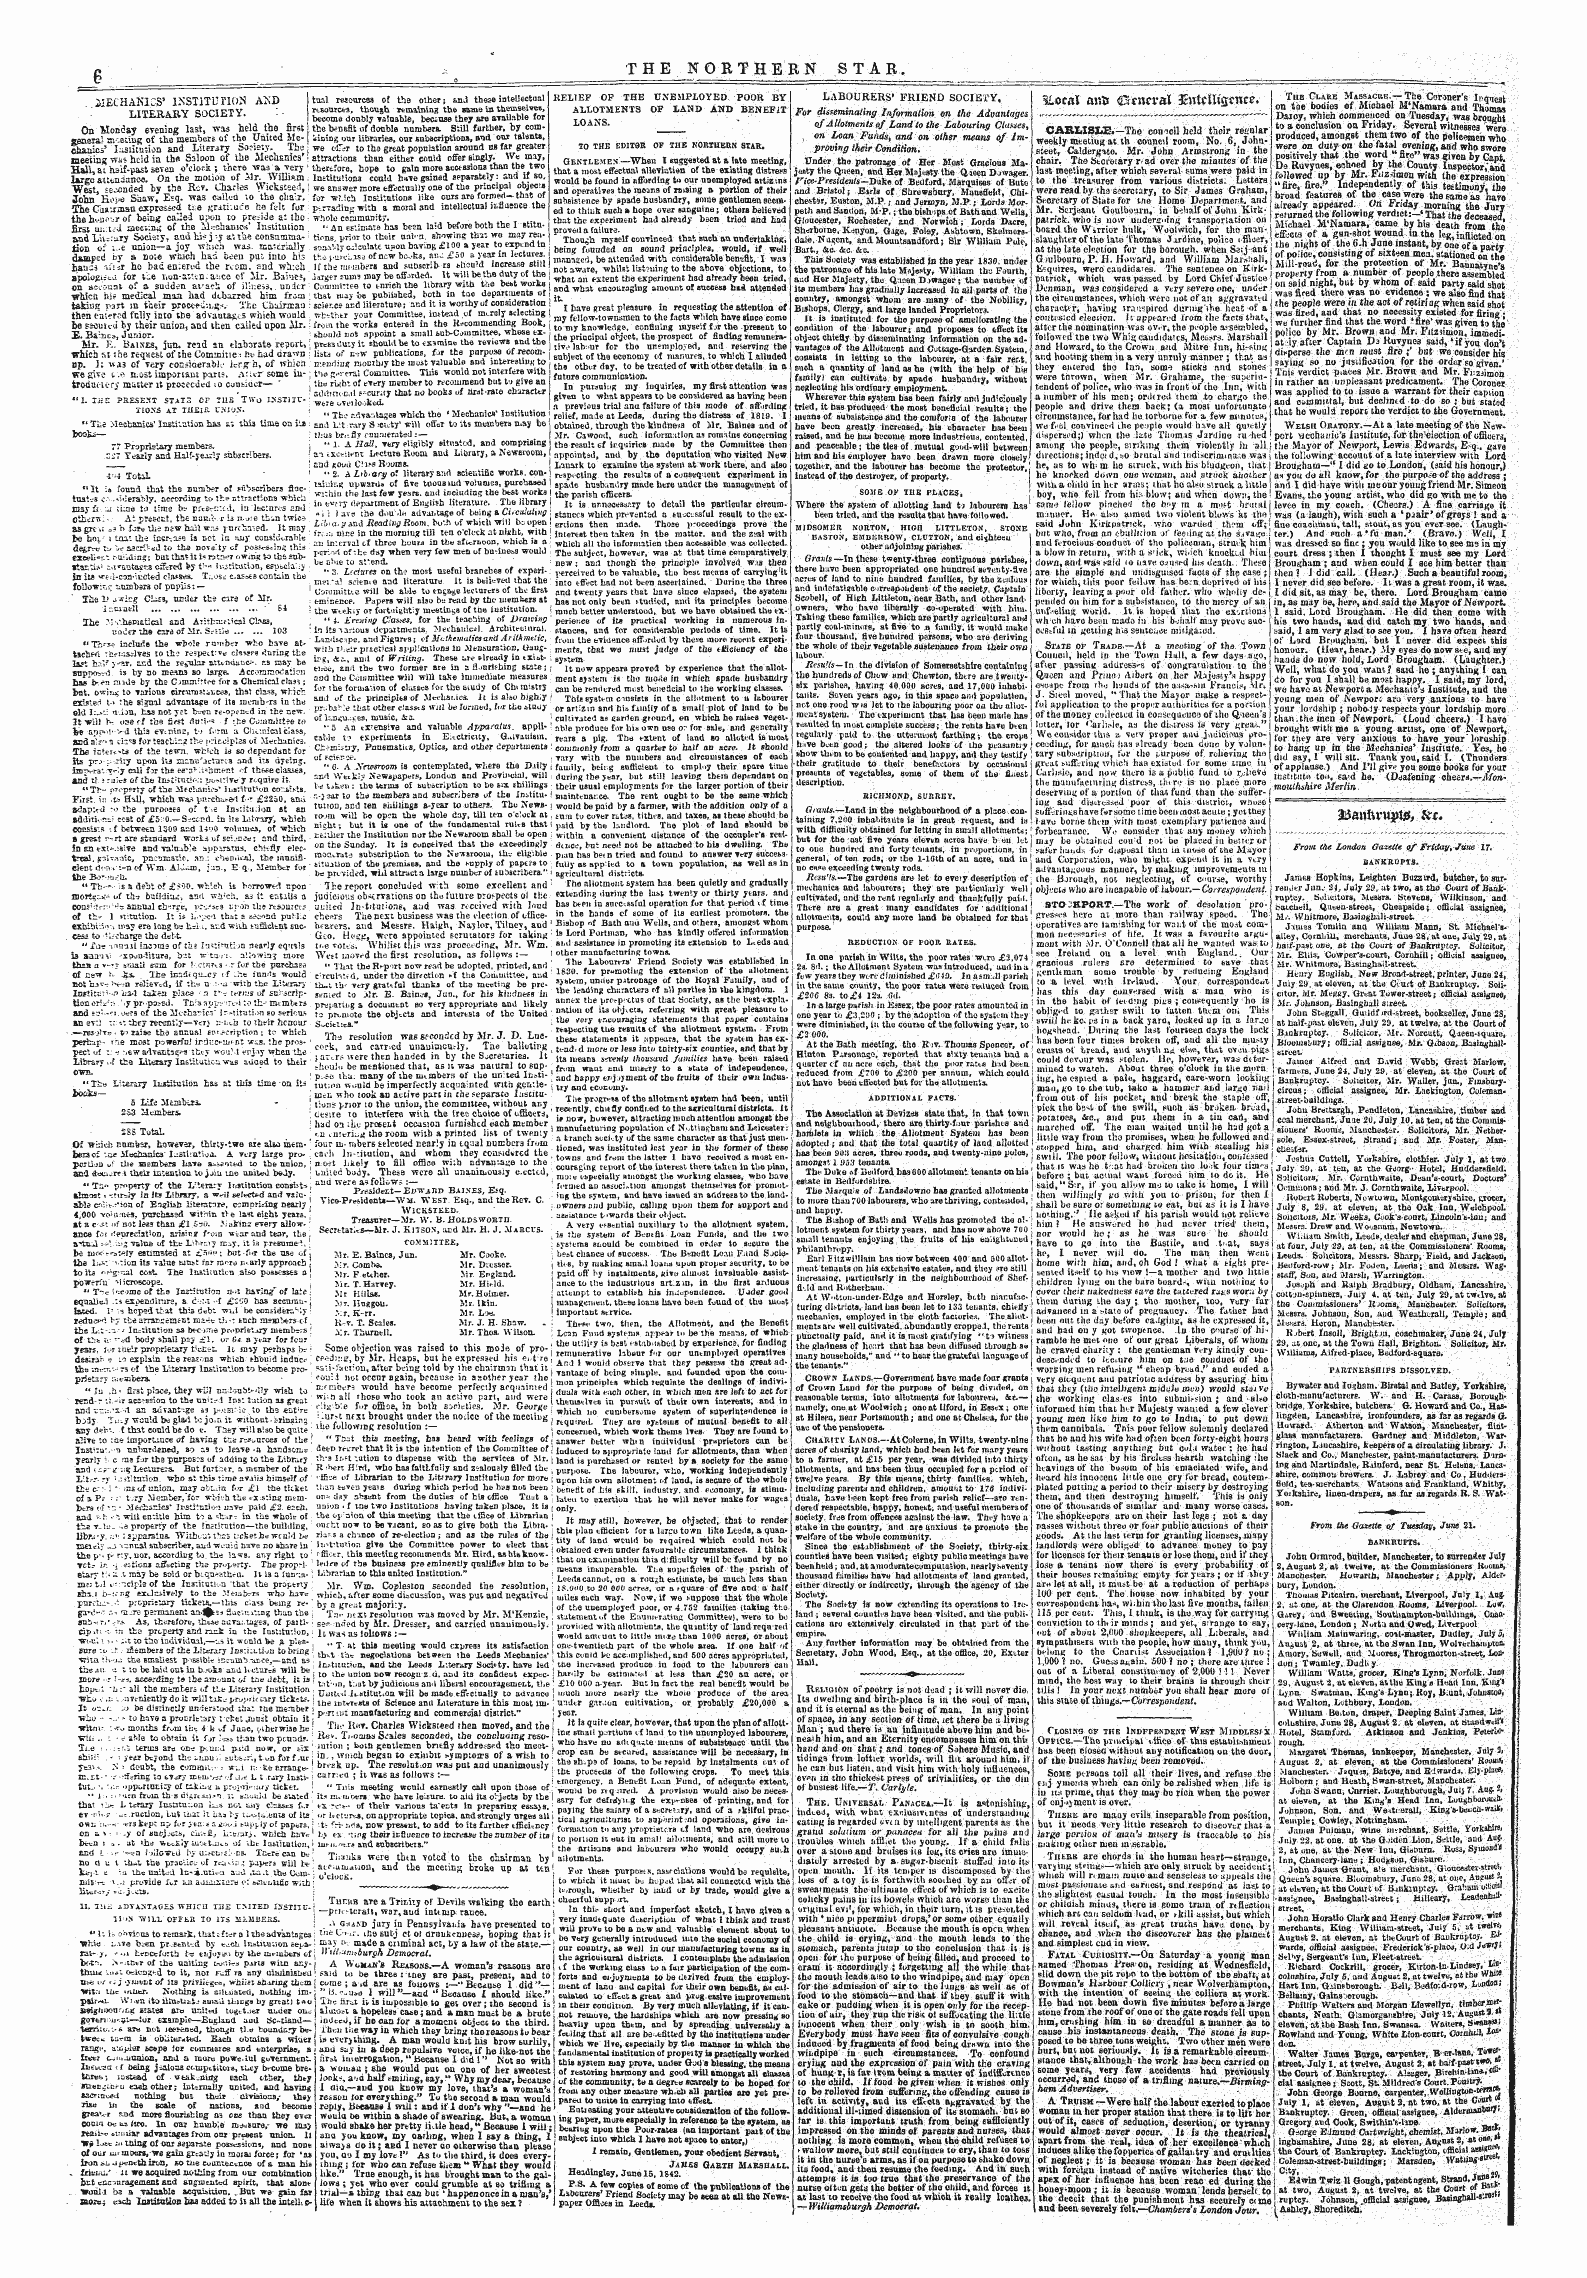 Northern Star (1837-1852): jS F Y, 4th edition: 6